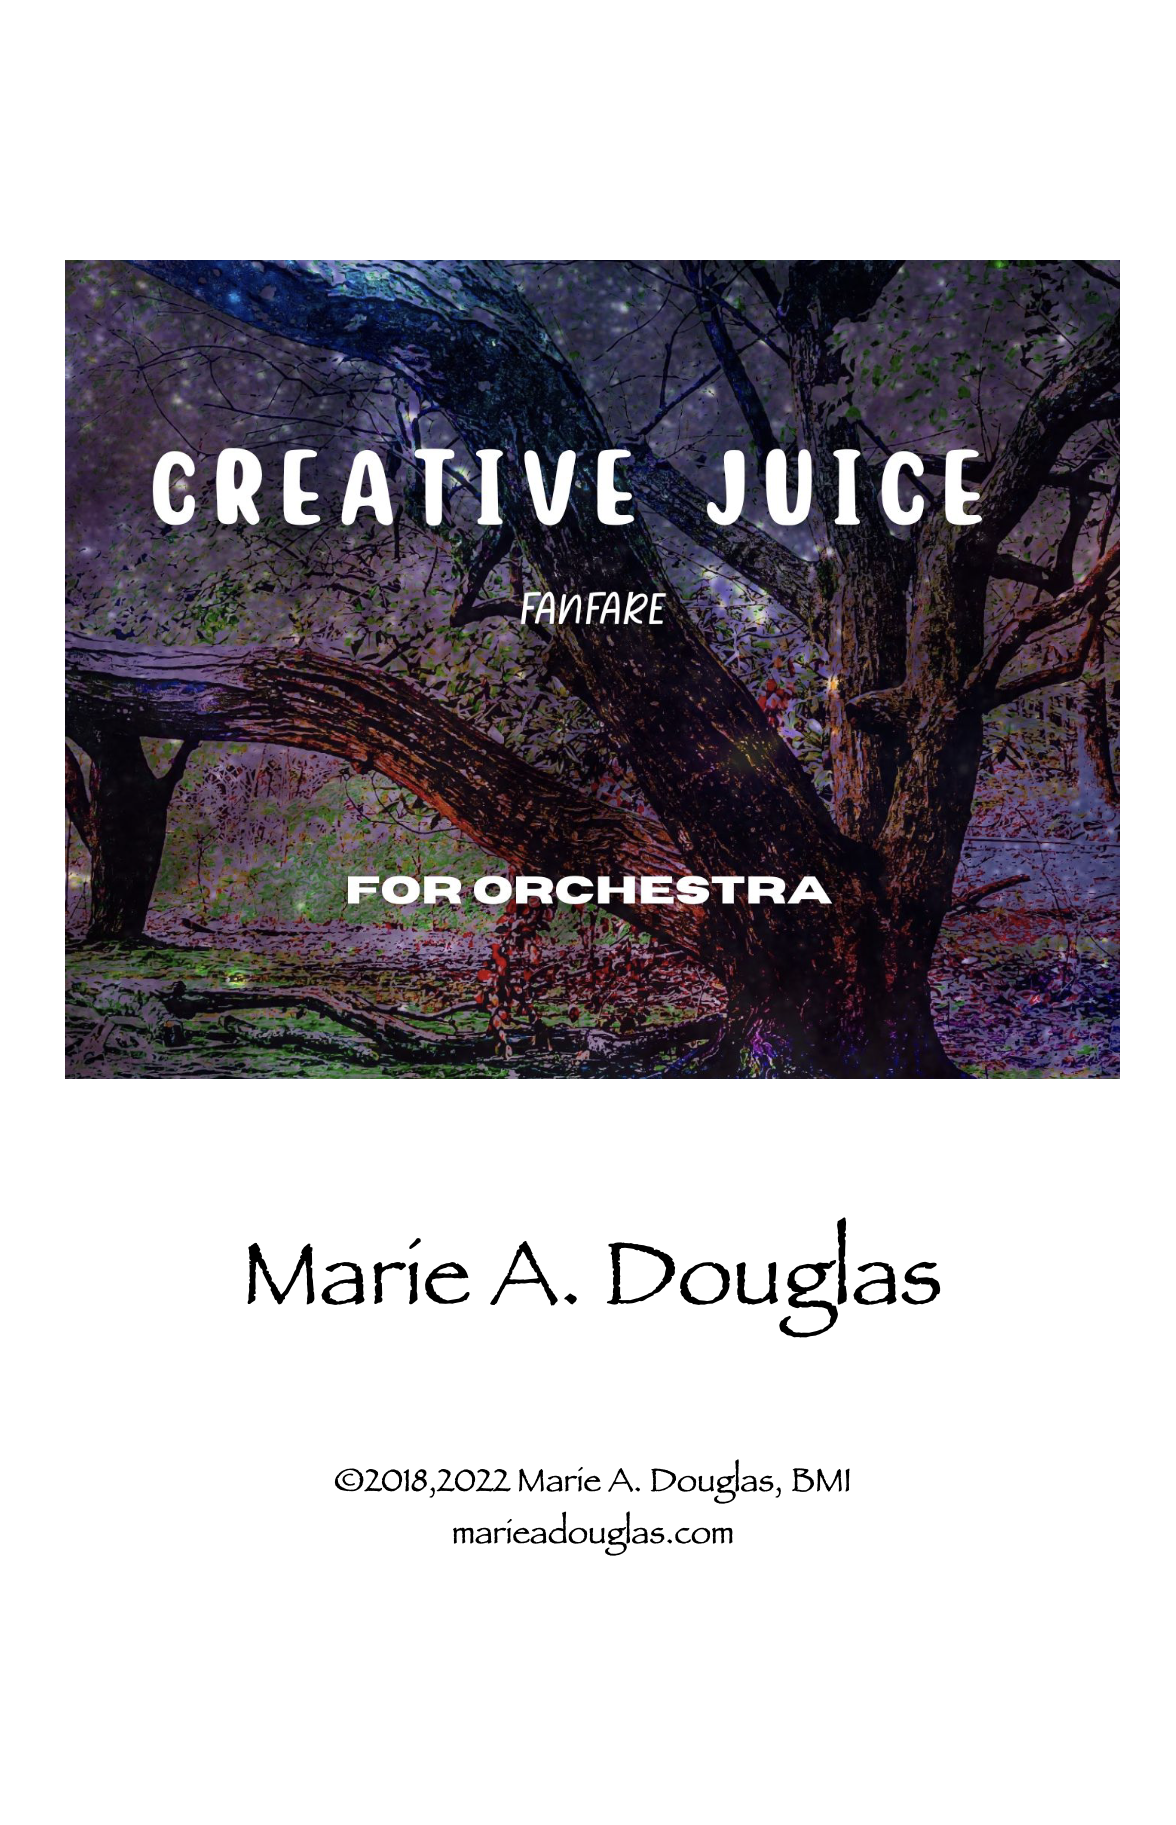 Creative Juice by Marie Douglas